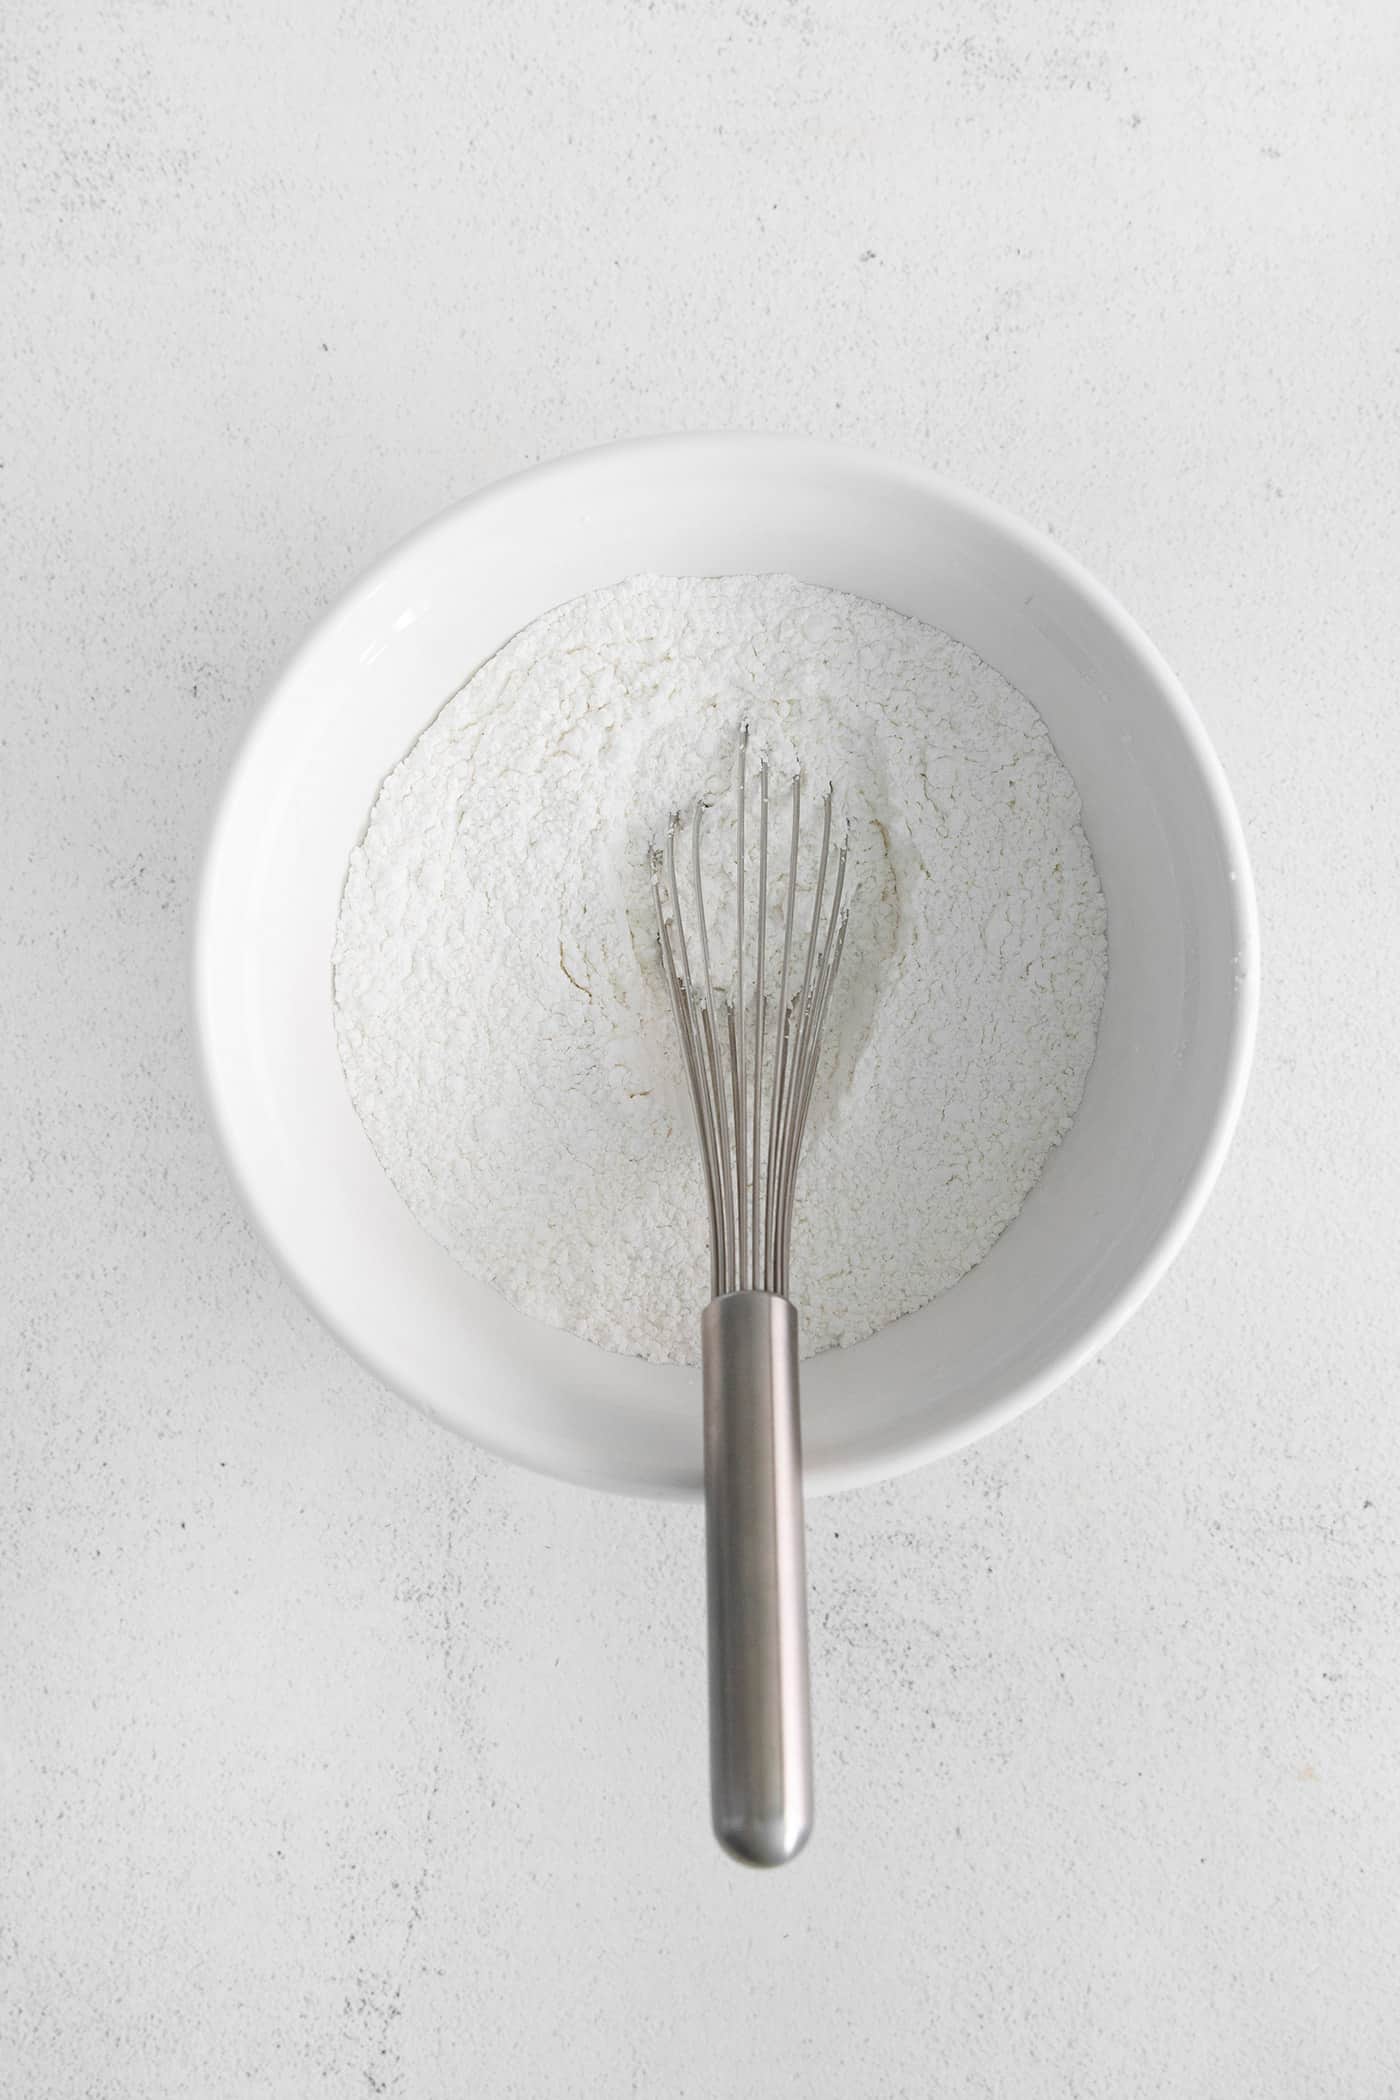 Cake flour in a bowl